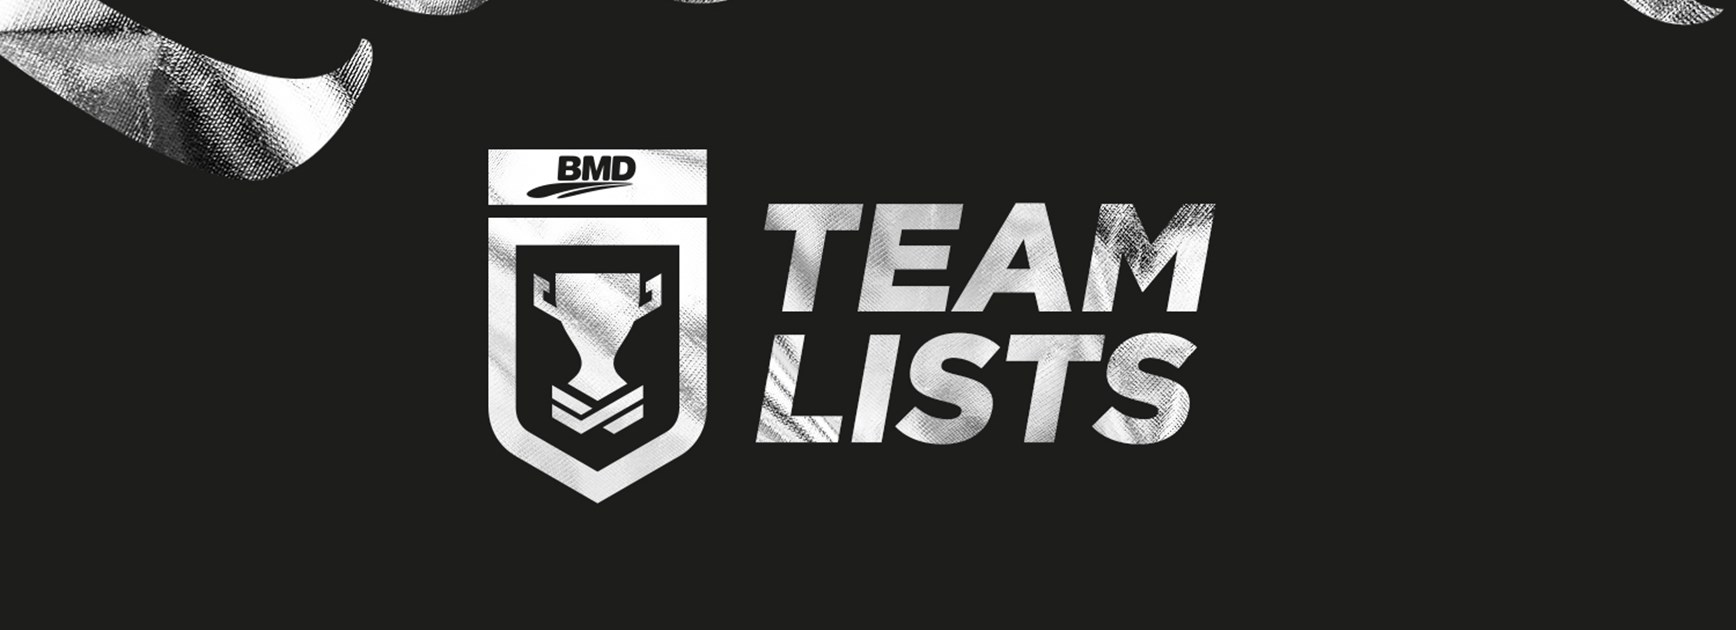 Round 1 BMD Premiership team lists